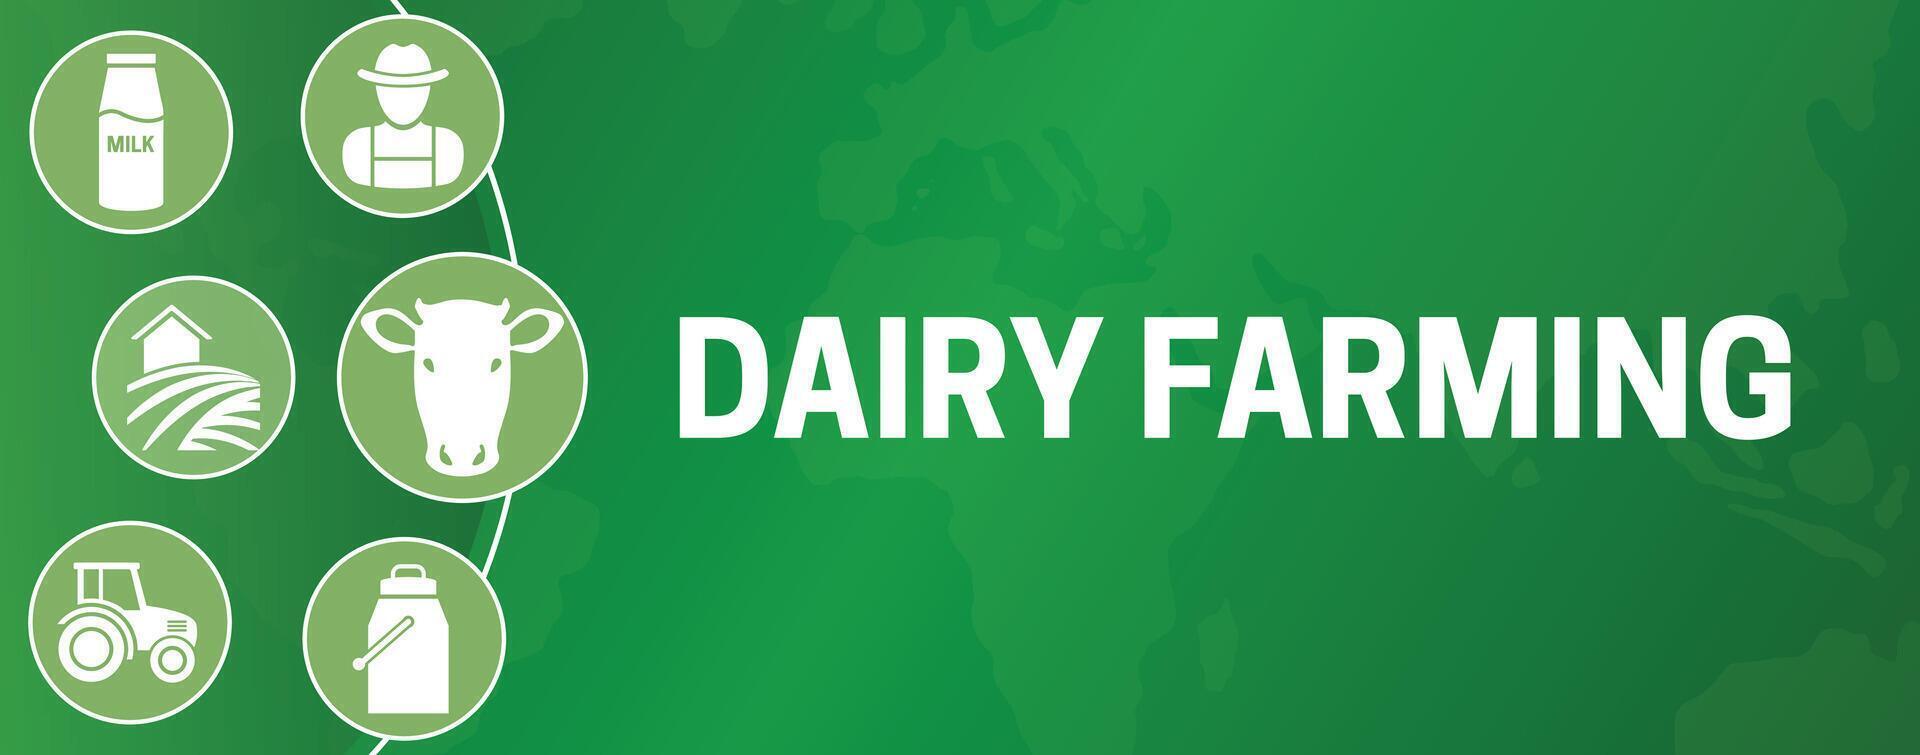 Dairy Farming Banner Illustration Background vector